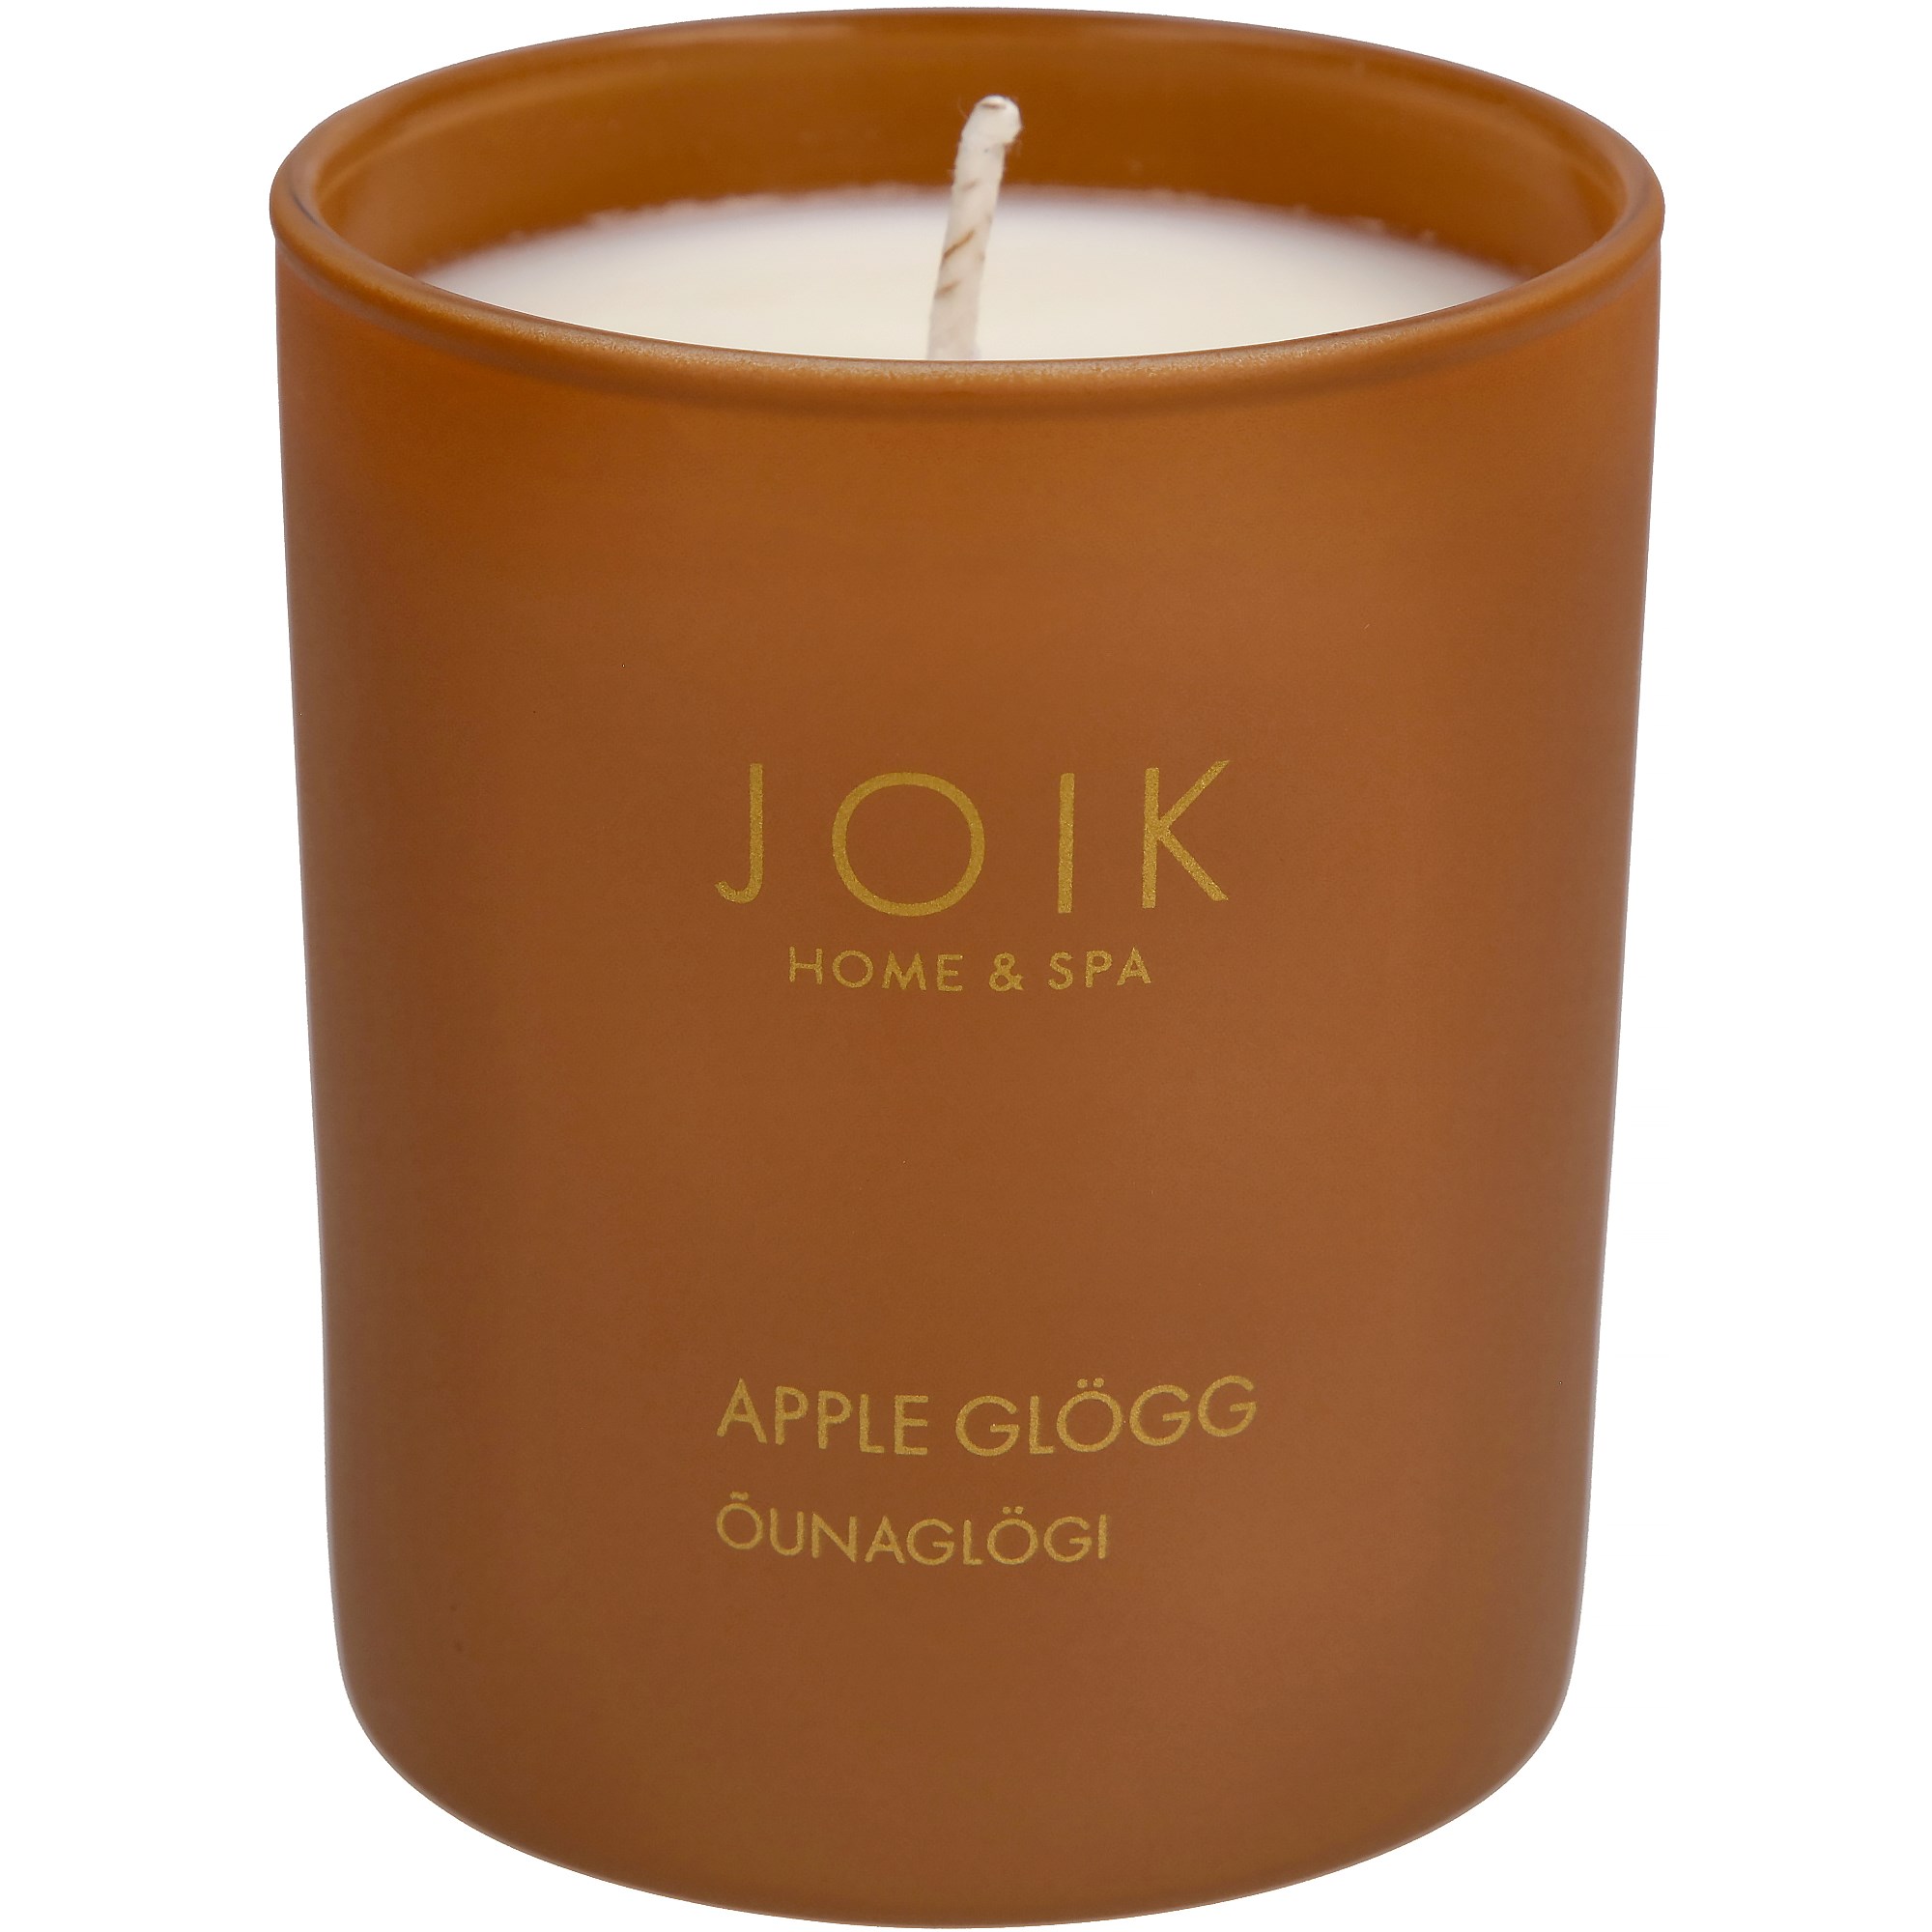 JOIK Organic Doftljus Apple Glogg -Limited Edition Christmas Coll